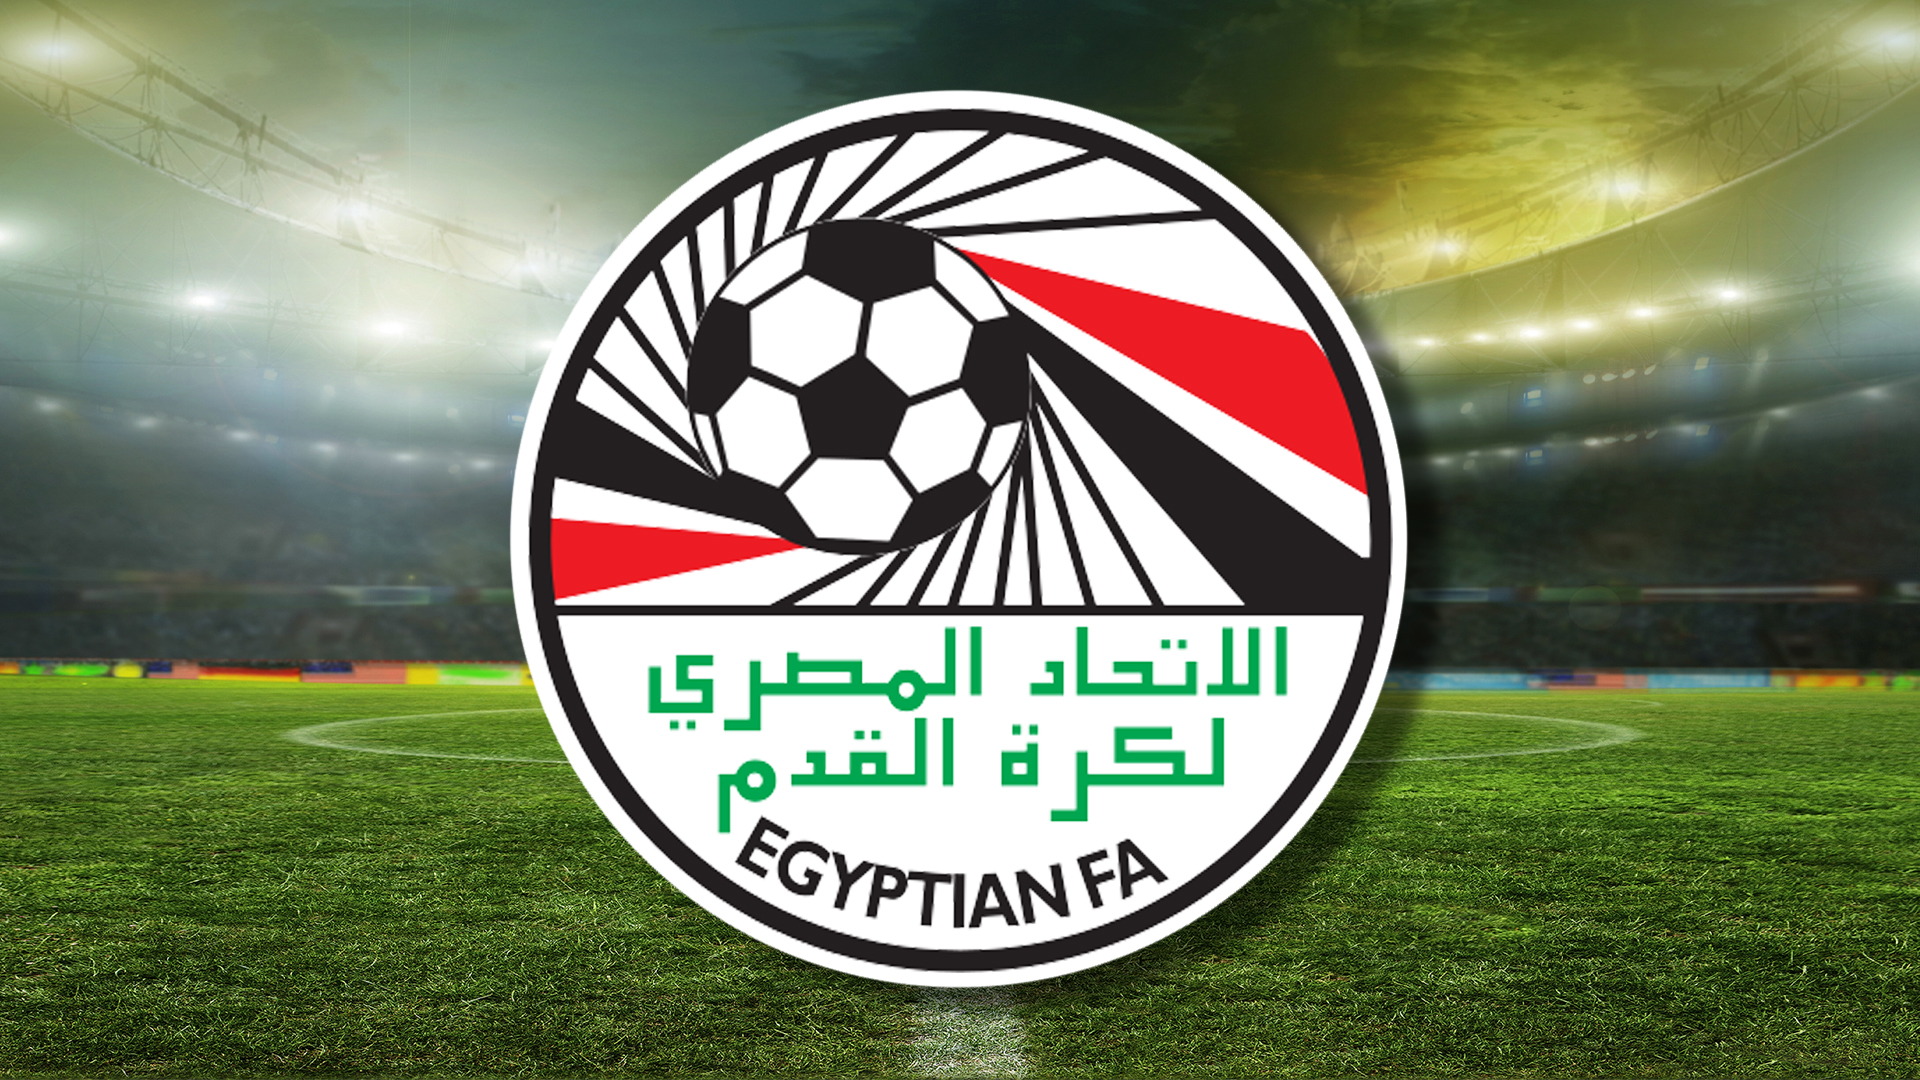 Egypt football badge